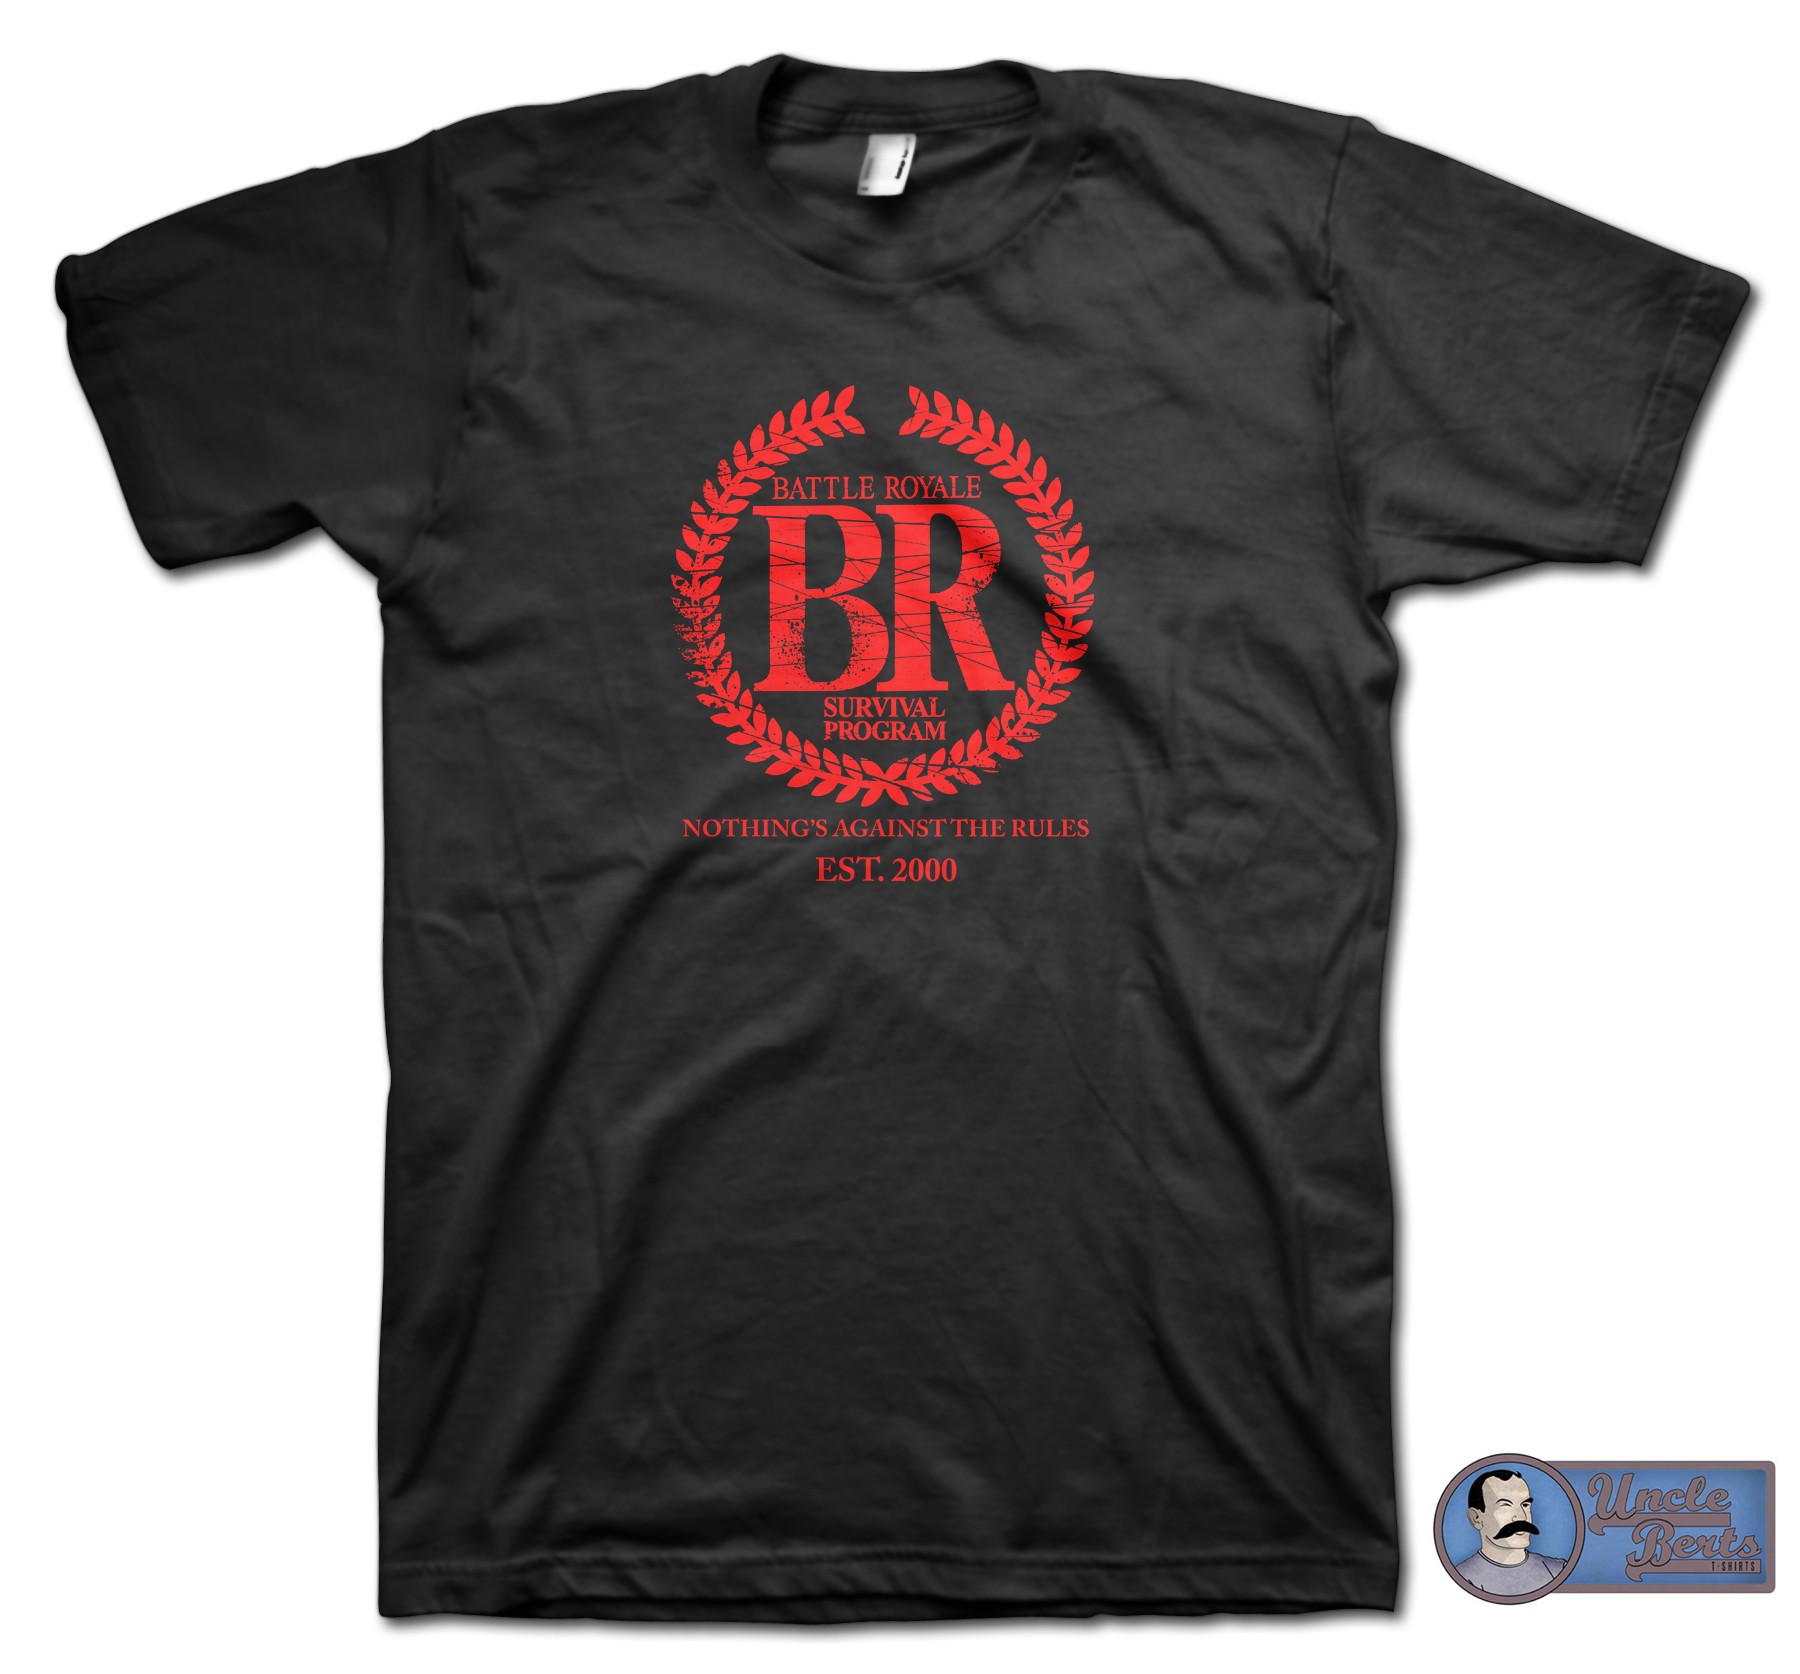 Battle Royale (2000) inspired Battle Royale logo T-Shirt